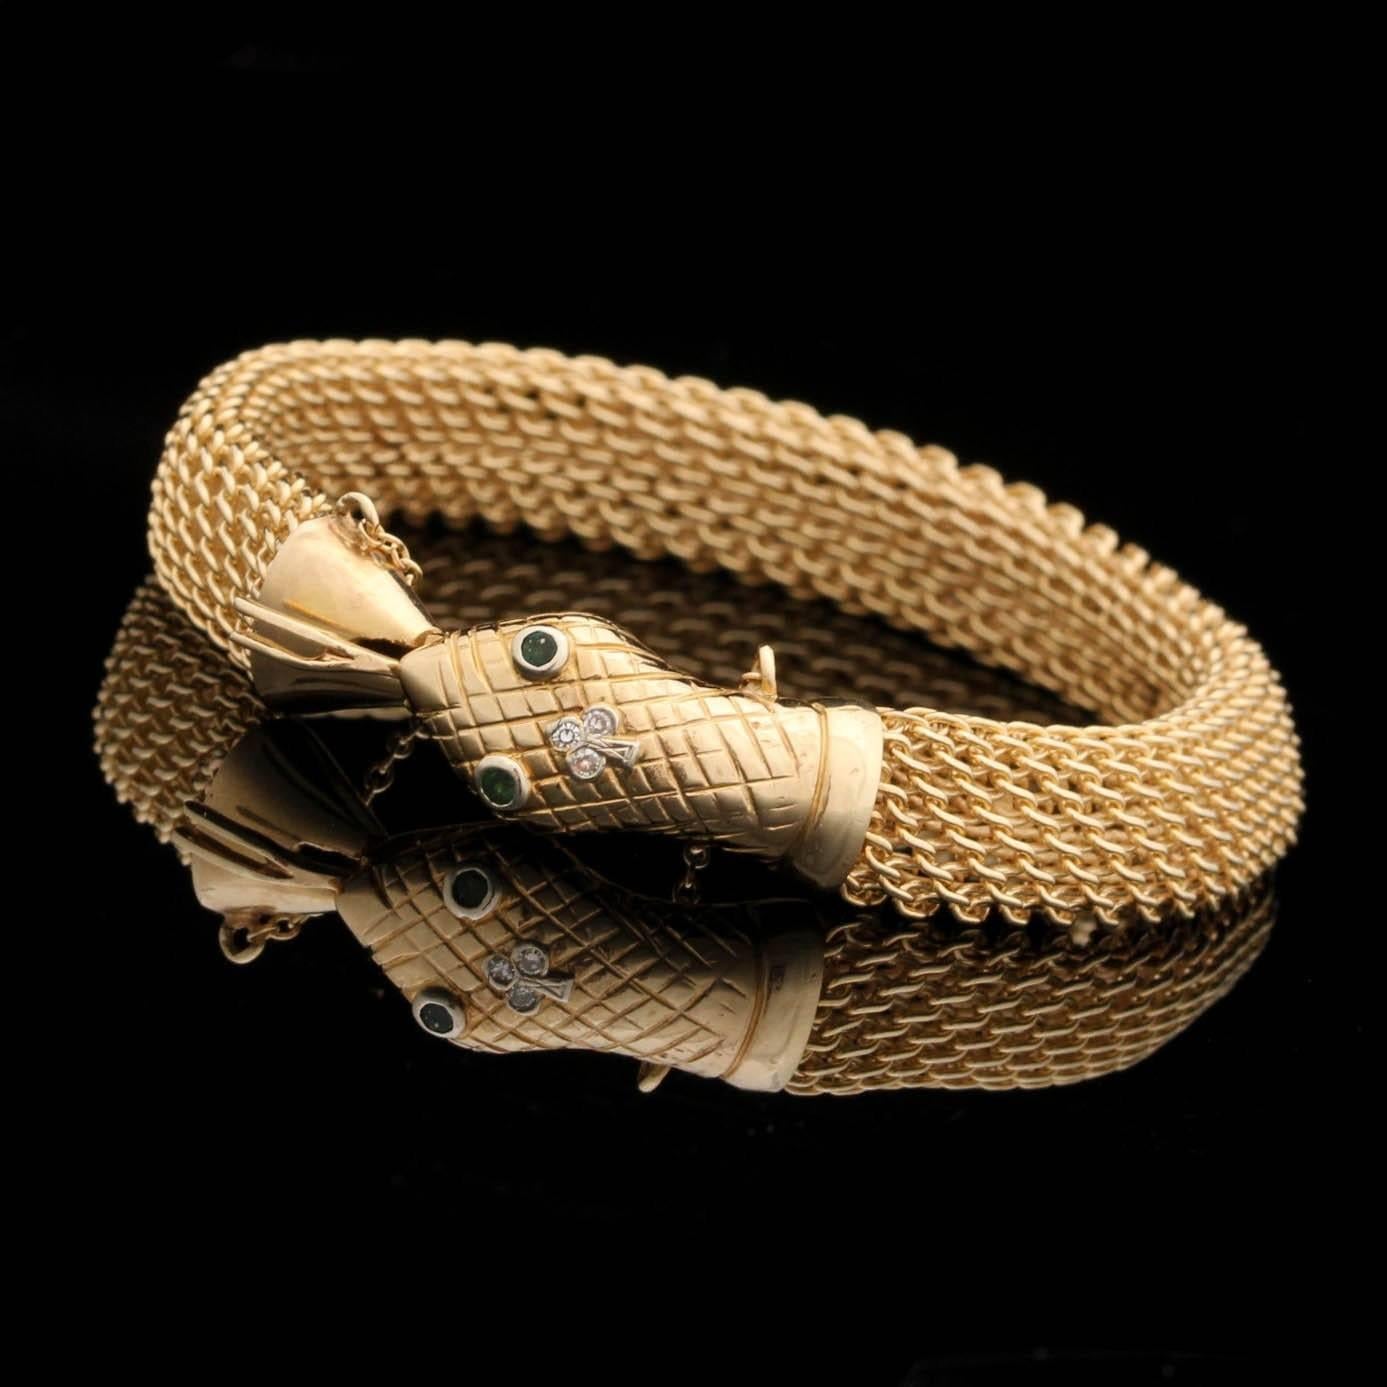 14-Karat Gold Snake Bracelet with Emerald Eyes and Diamonds For Sale 2